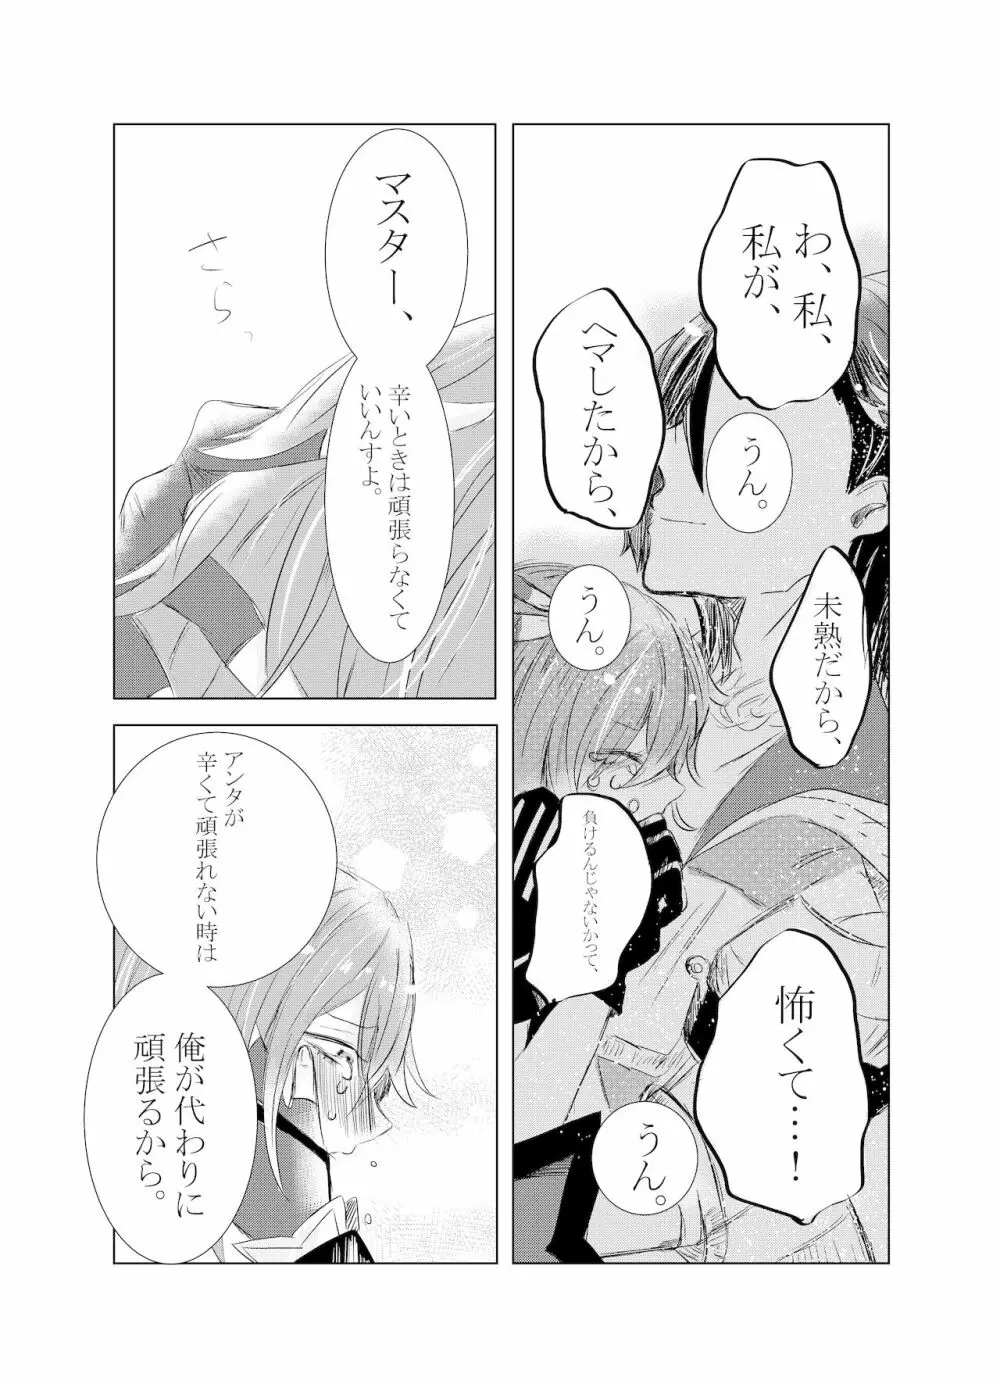 Hifumi (Hifumi) [Hitori ansoro] rēzondētoru wa koko ni arite [man guda ♀] [zenpen] (fate grand order ) - page14